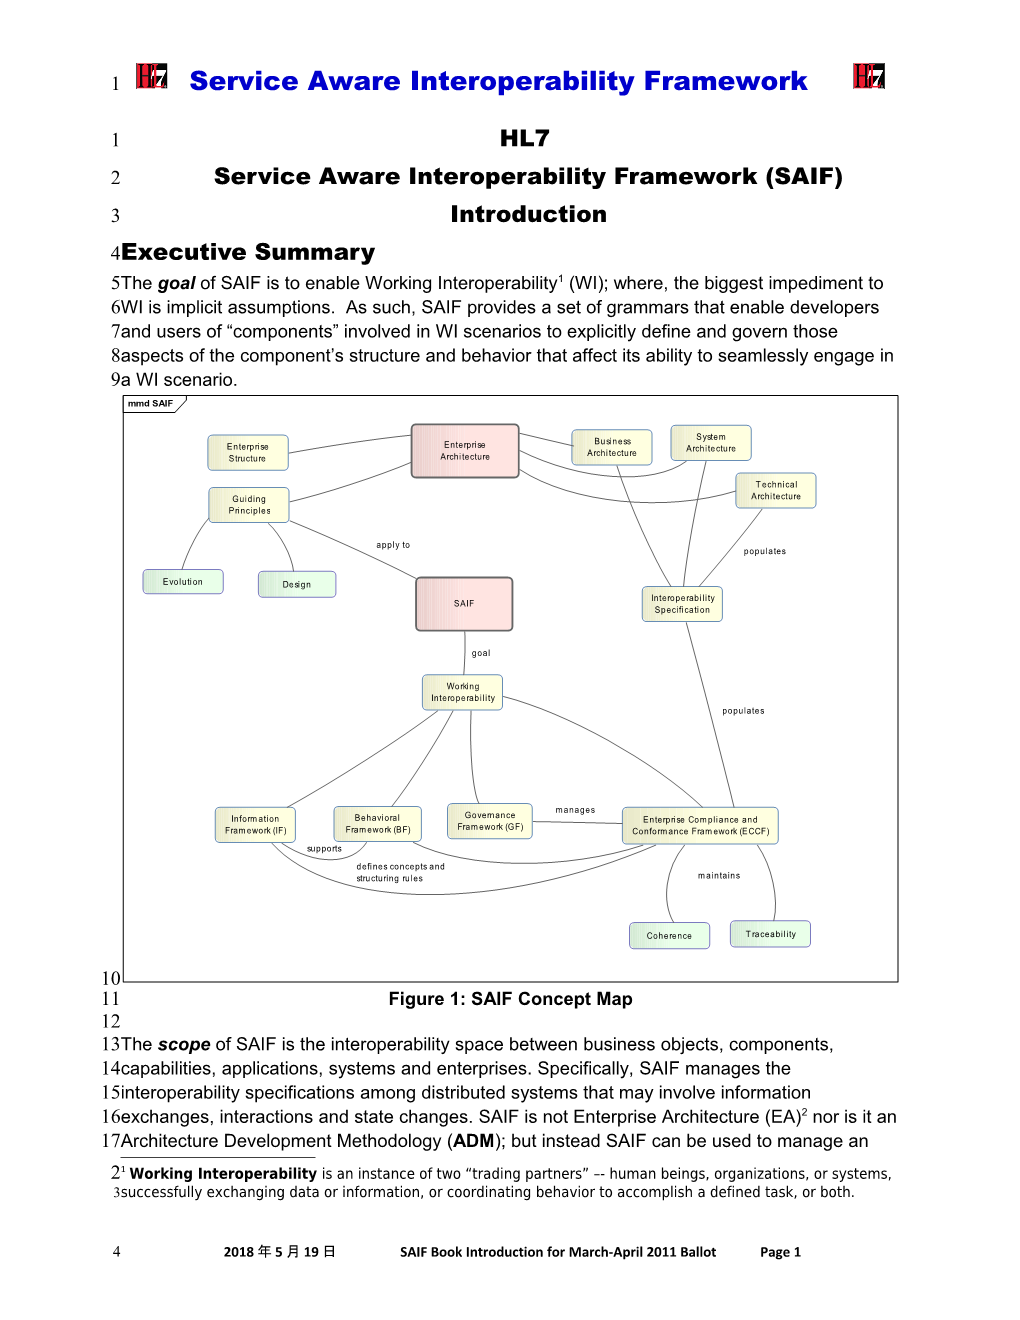 Service Aware Interoperability Framework (SAIF) Introduction